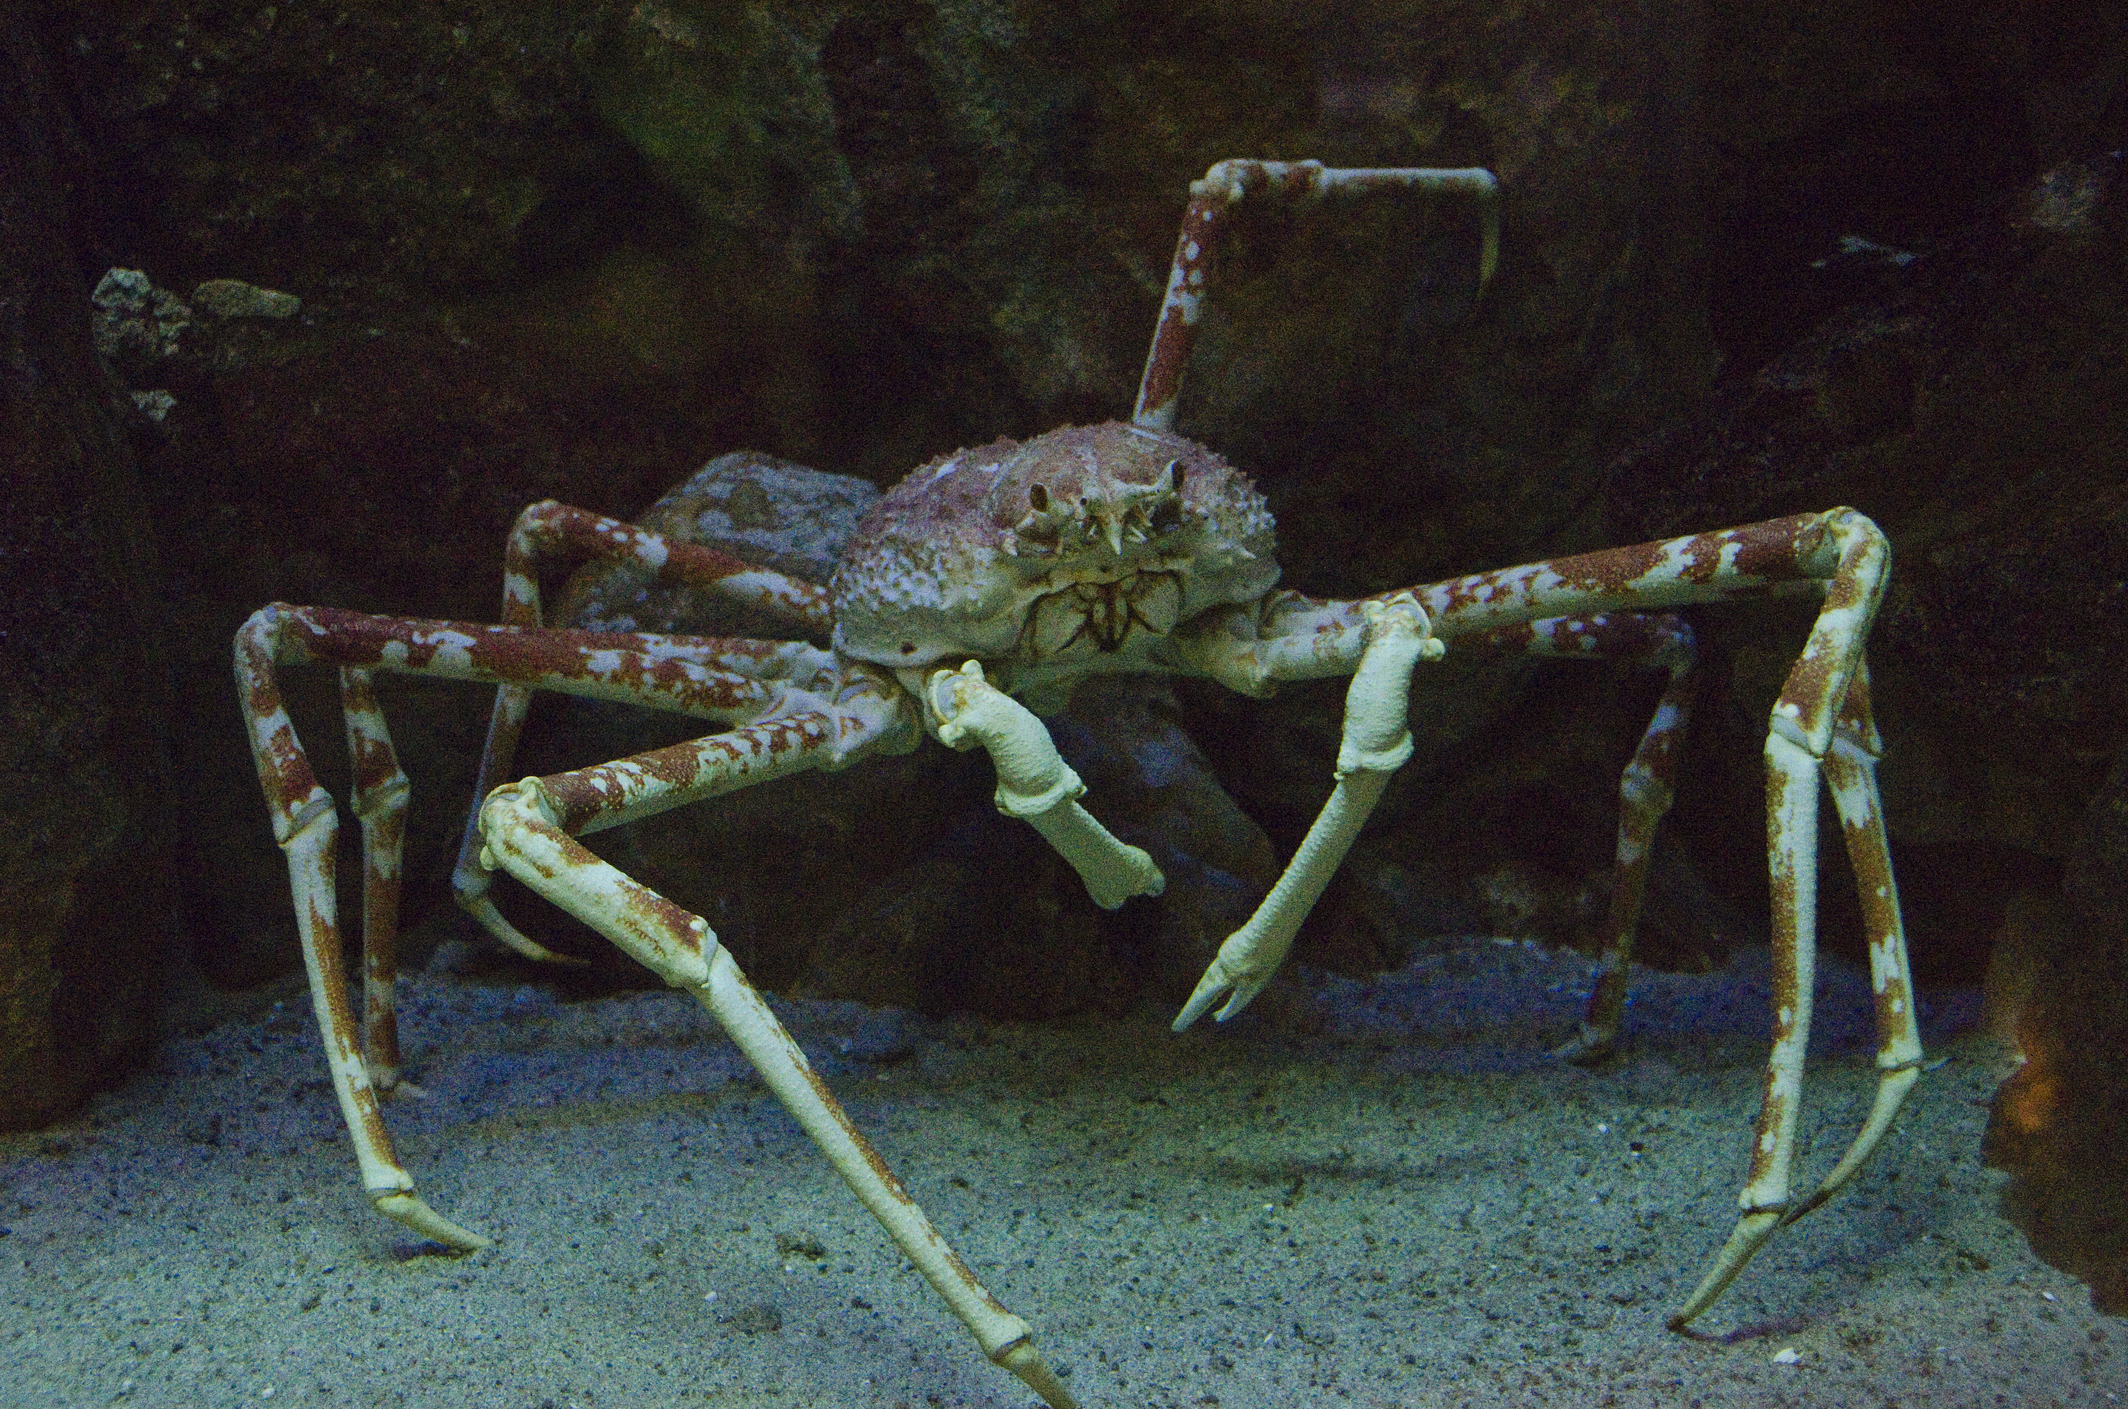 deep sea giant spider crab